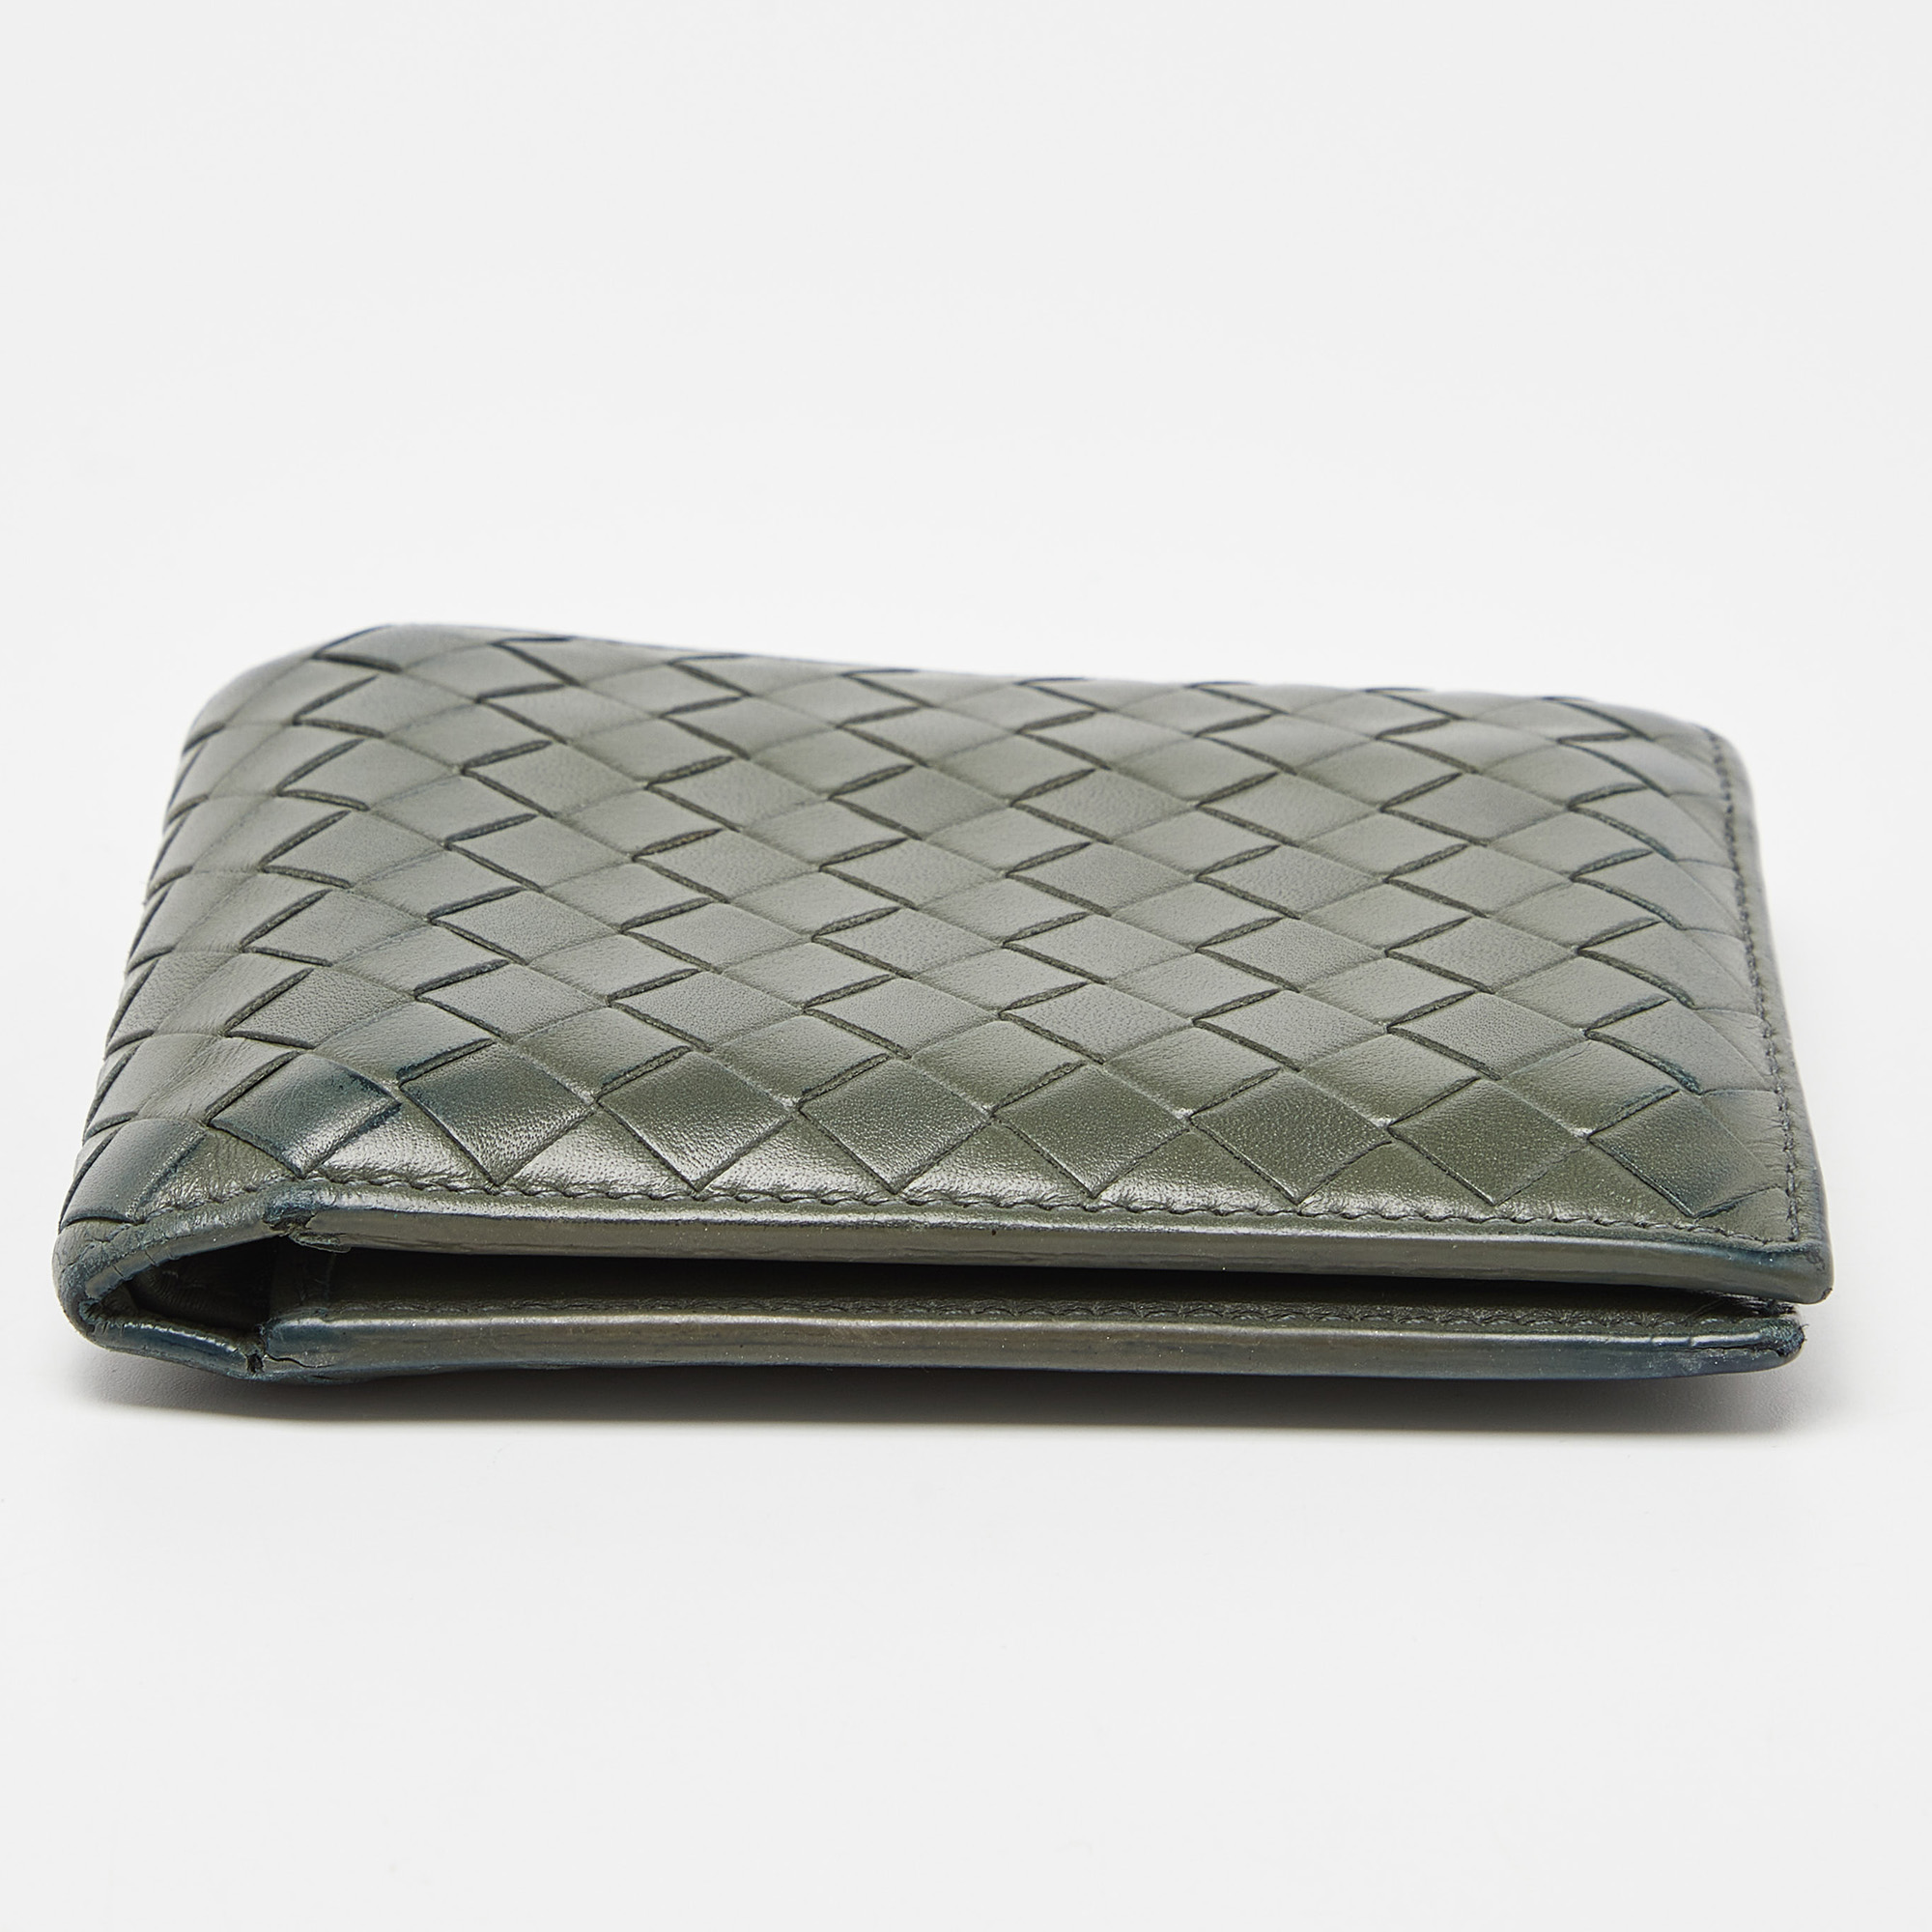 Bottega Veneta Olive Green Intrecciato Leather Bifold Wallet